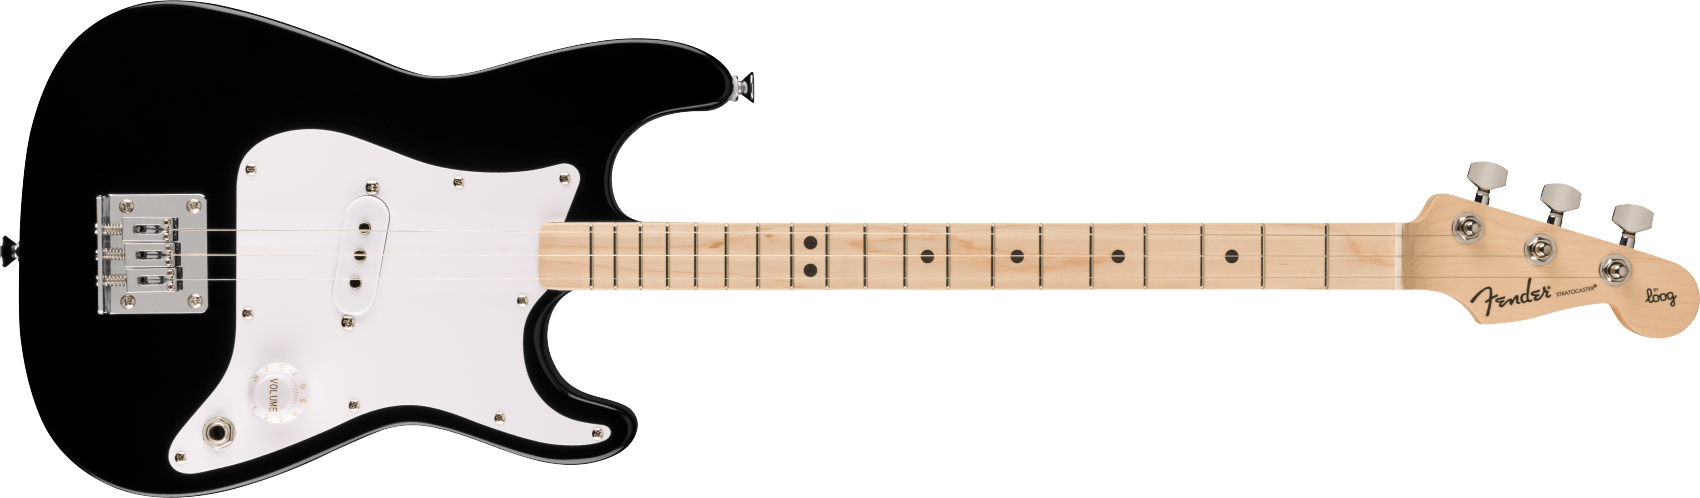 3-String x Loog Telecaster Children's Guitar (Black or Green) $169.15 + Free Shipping